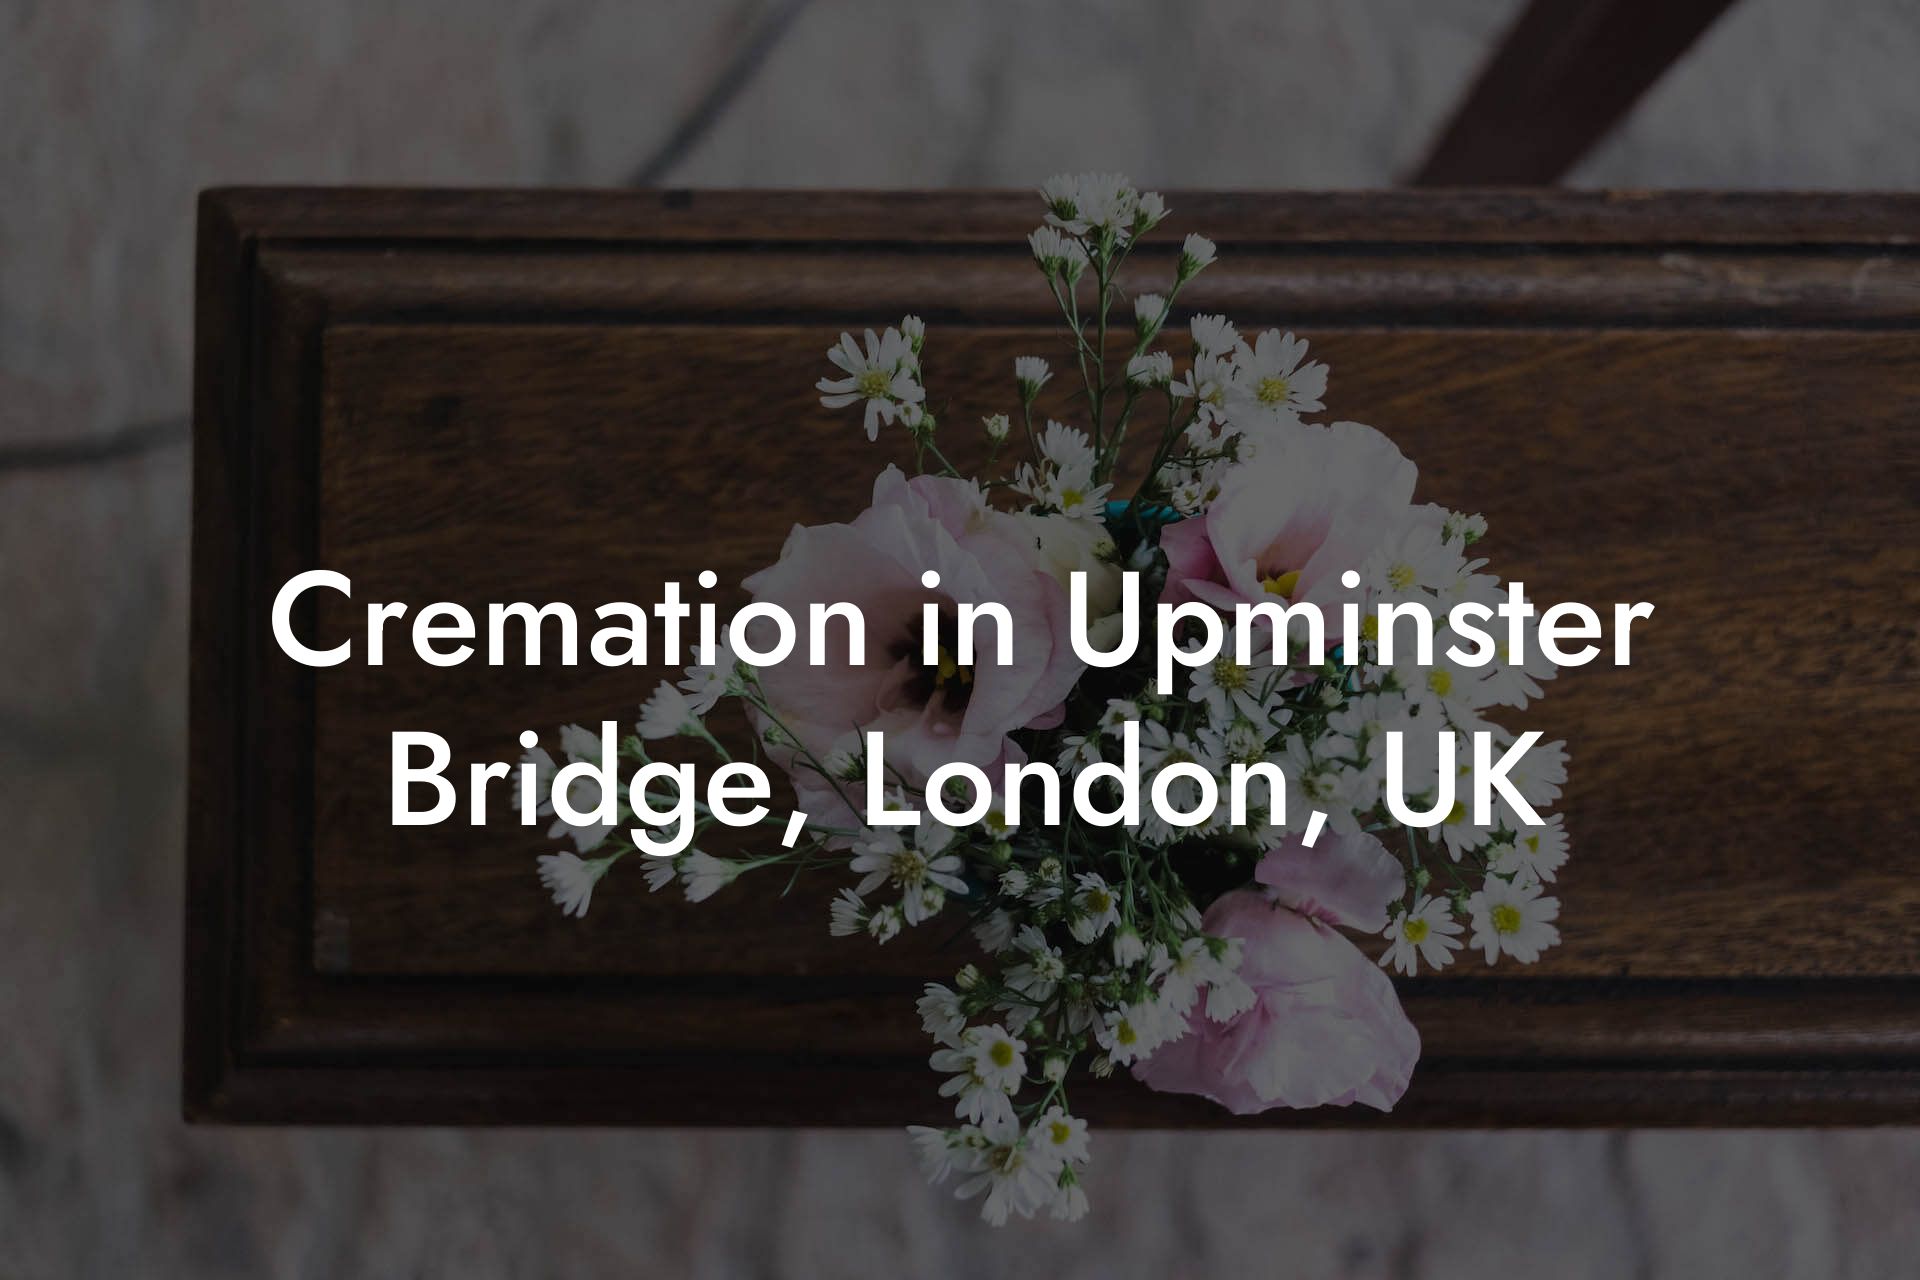 Cremation in Upminster Bridge, London, UK